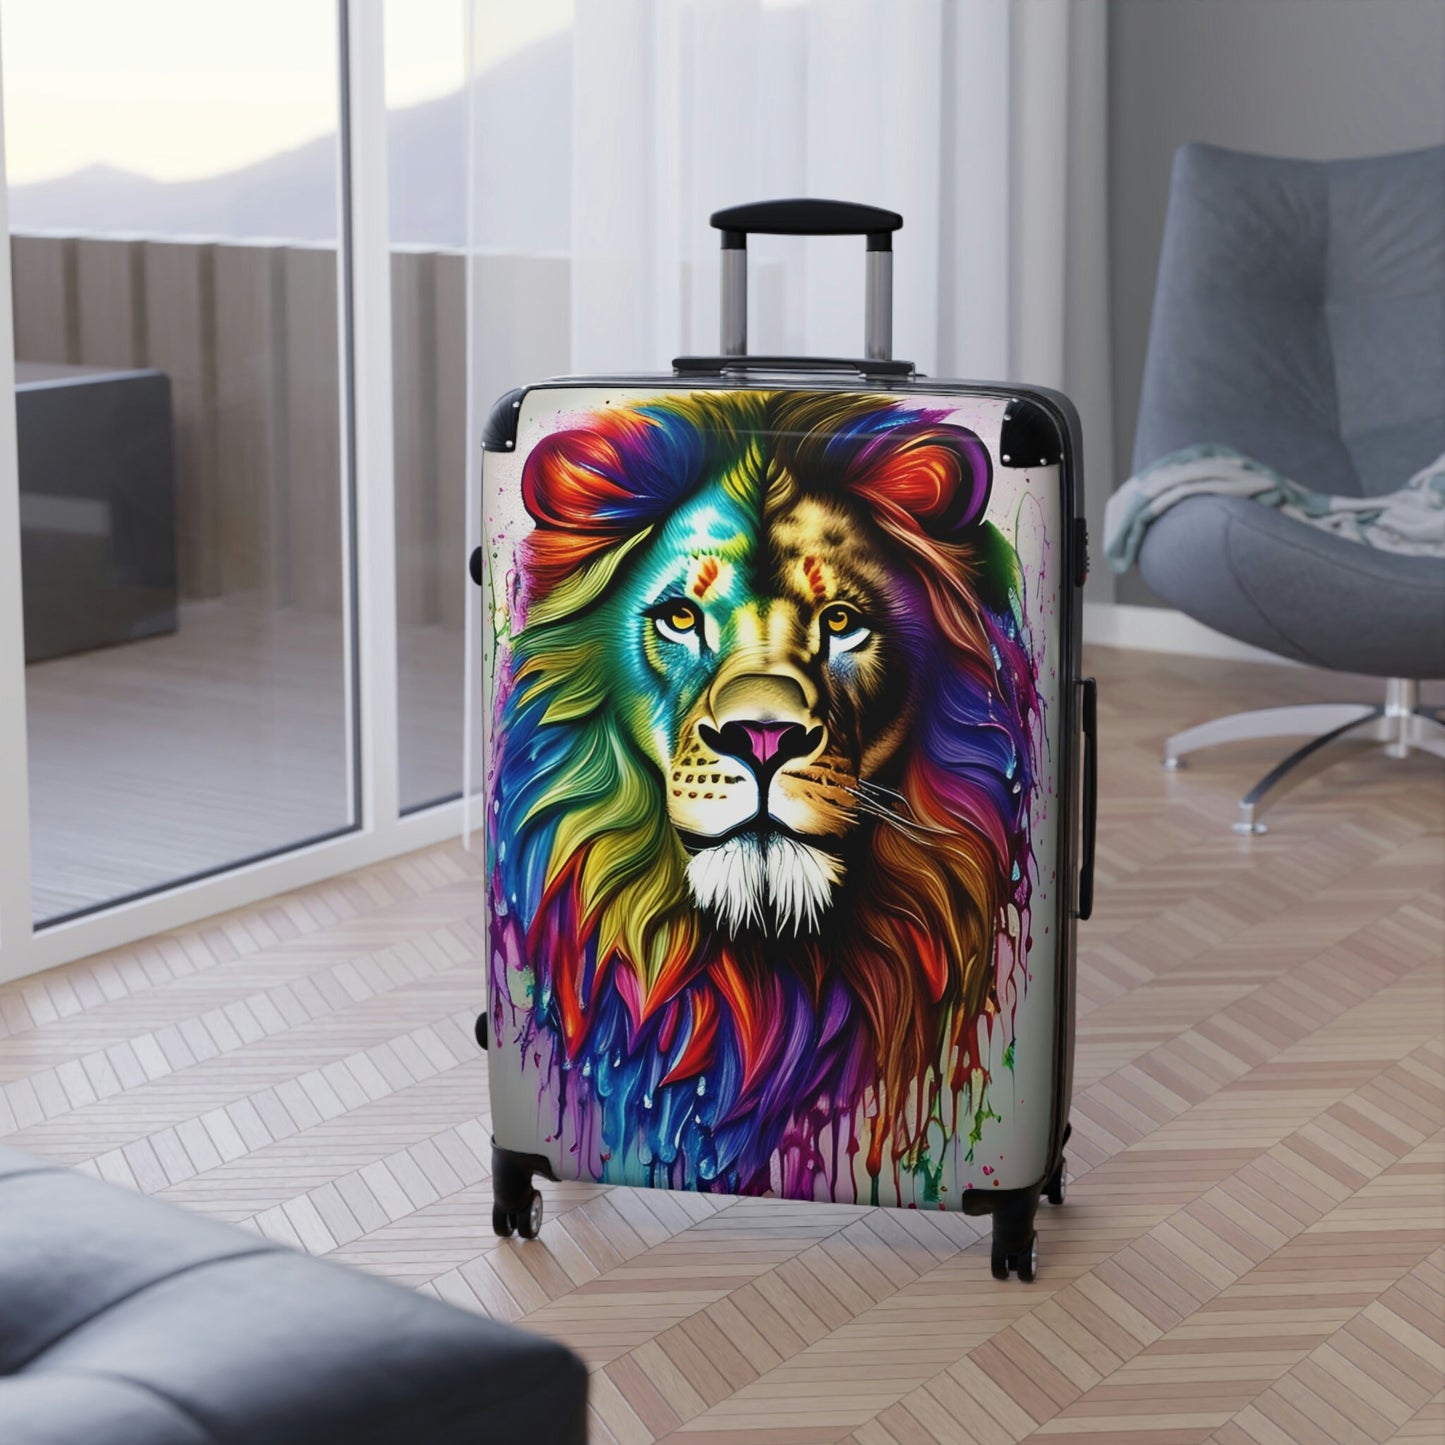 Men's Suitcase, Man's Suitcase, Suitcase for Men,  Pride Suitcase, LGBTQ Suitcase, Bisexual Suitcase, LGBT Suitcase, Rainbow Flag suitcase,